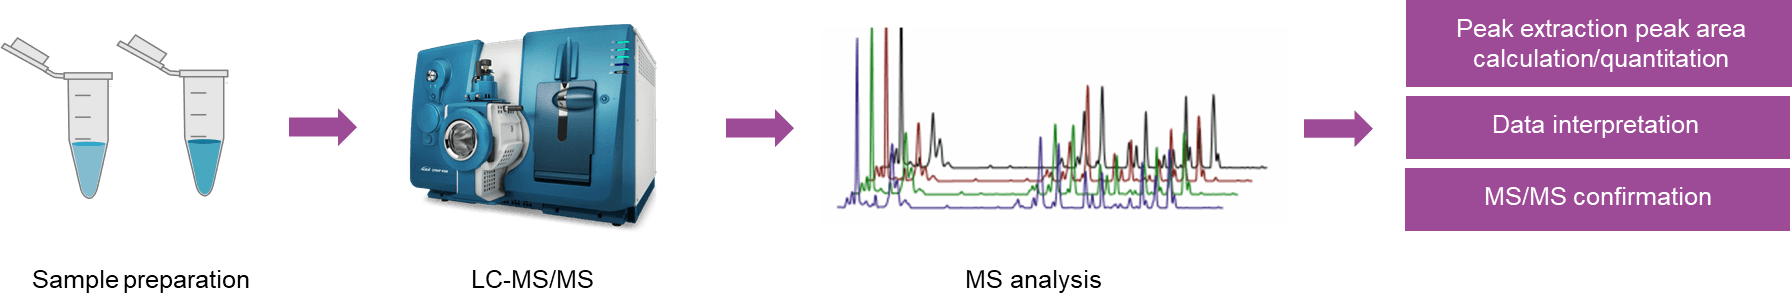 The overall workflow of CoA metabolites analysis